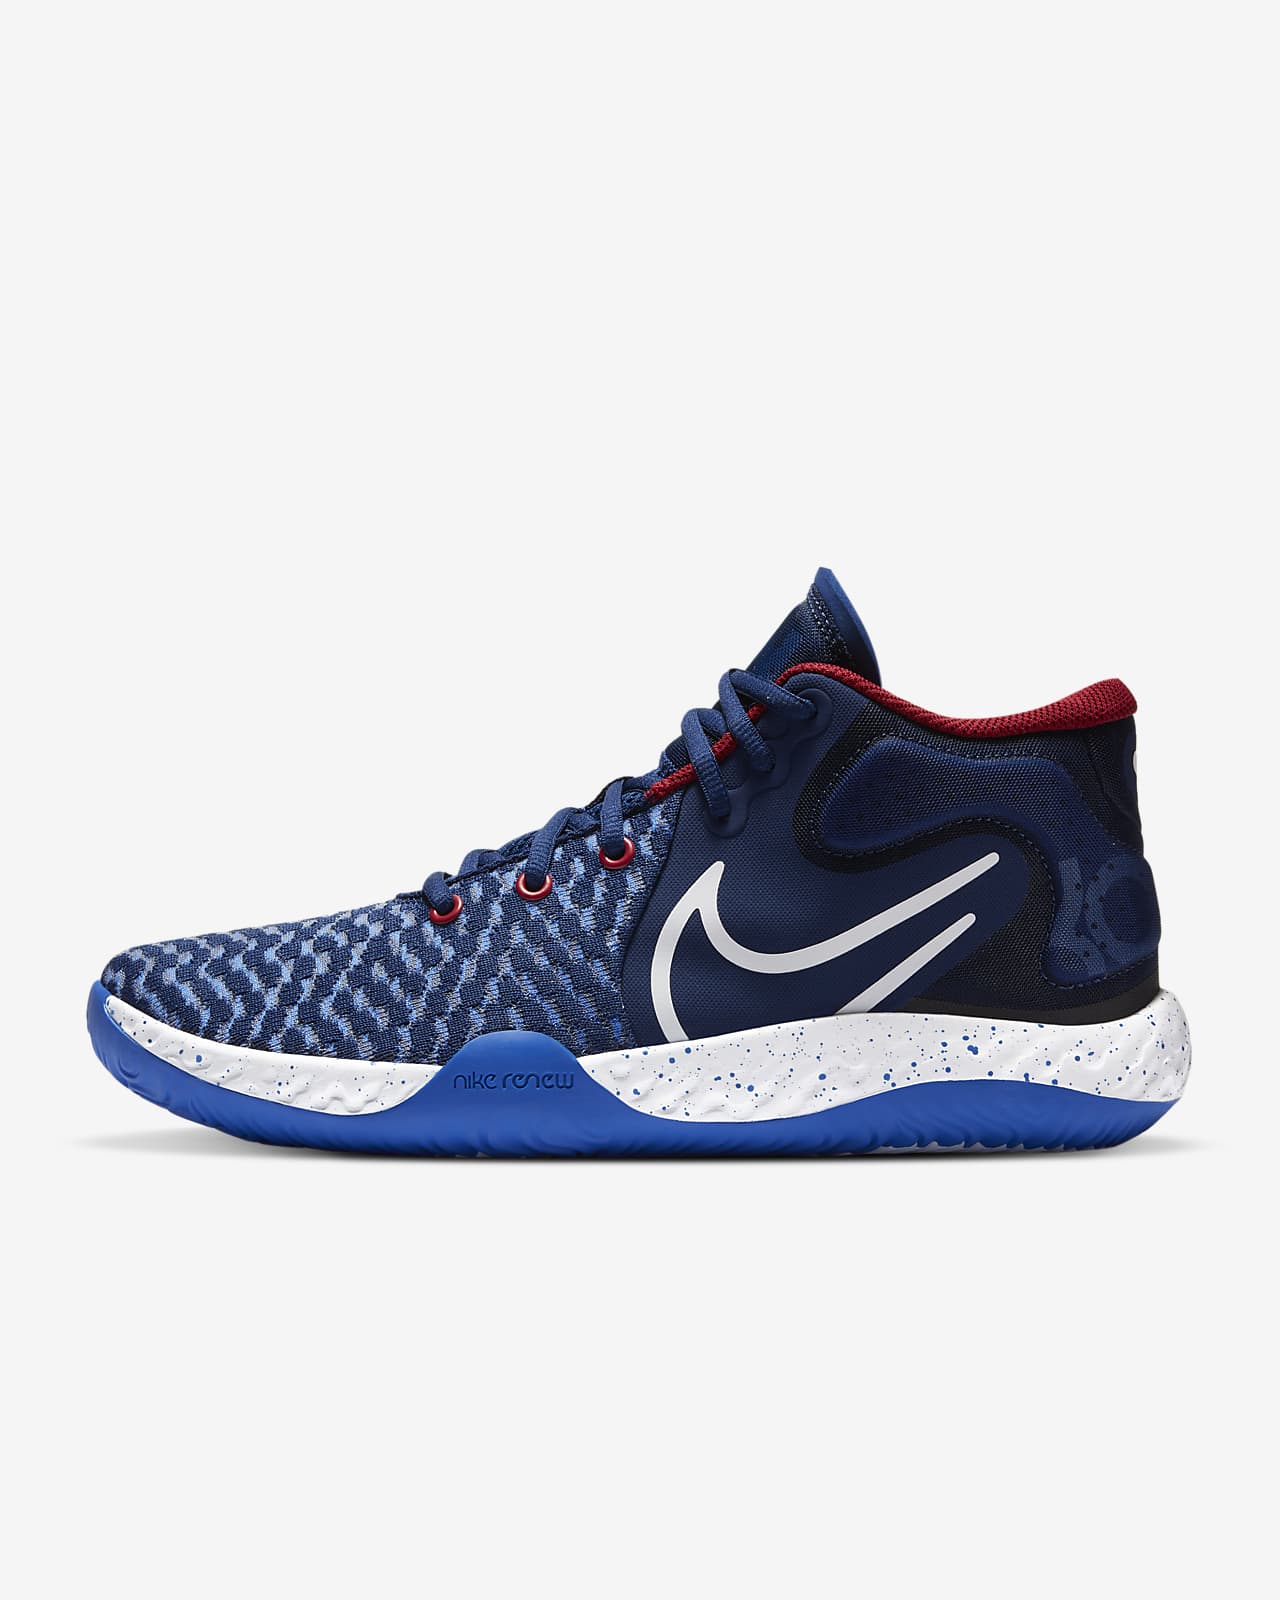 KD Trey 5 VIII Basketball Shoe. Nike PT